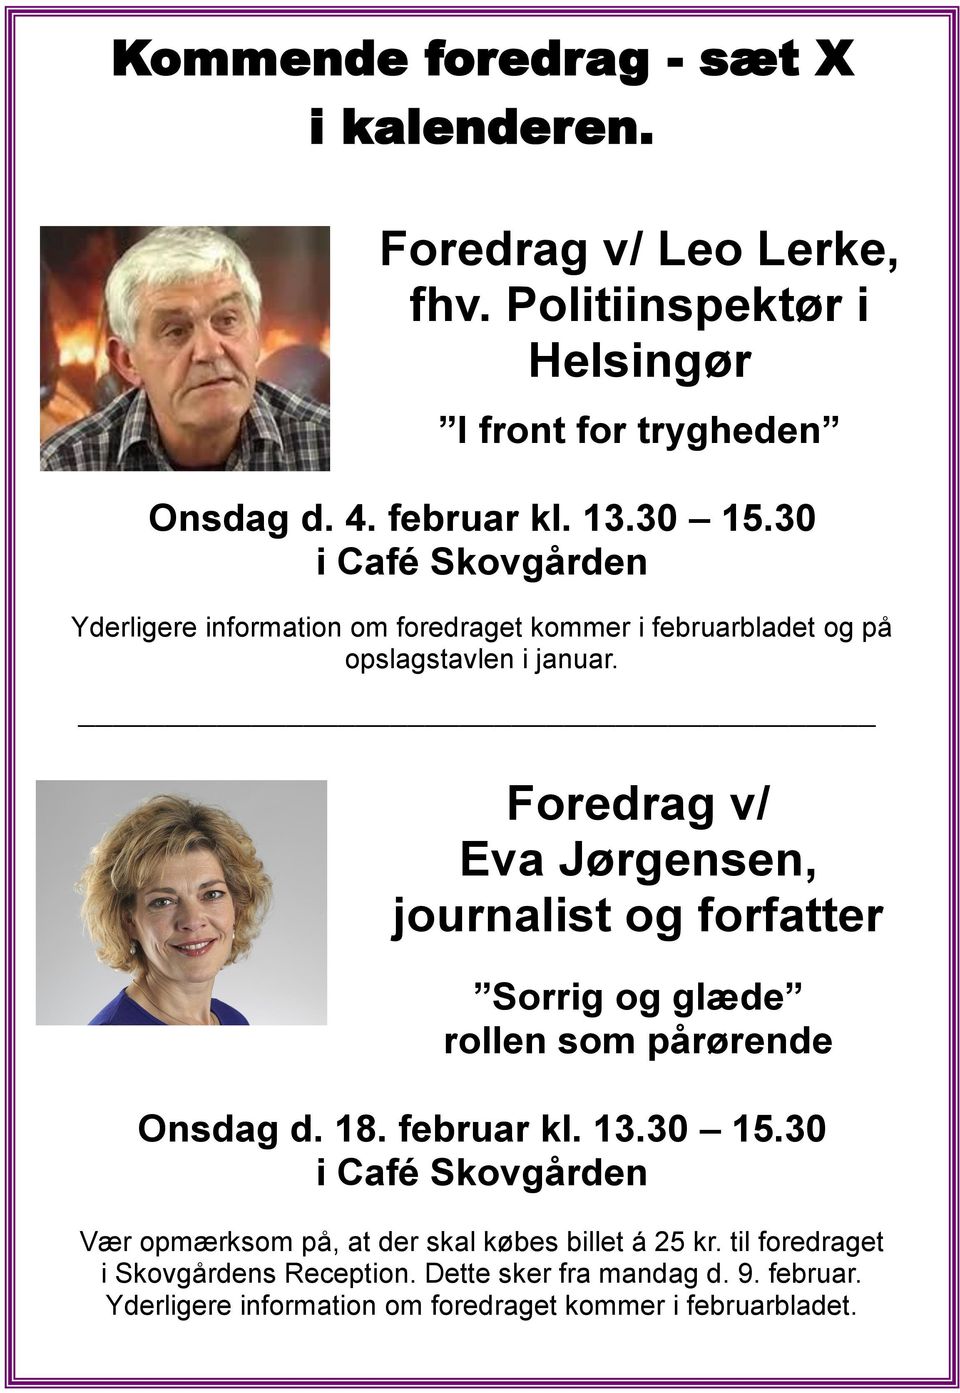 Foredrag v/ Eva Jørgensen, journalist og forfatter Sorrig og glæde rollen som pårørende Onsdag d. 18. februar kl. 13.30 15.